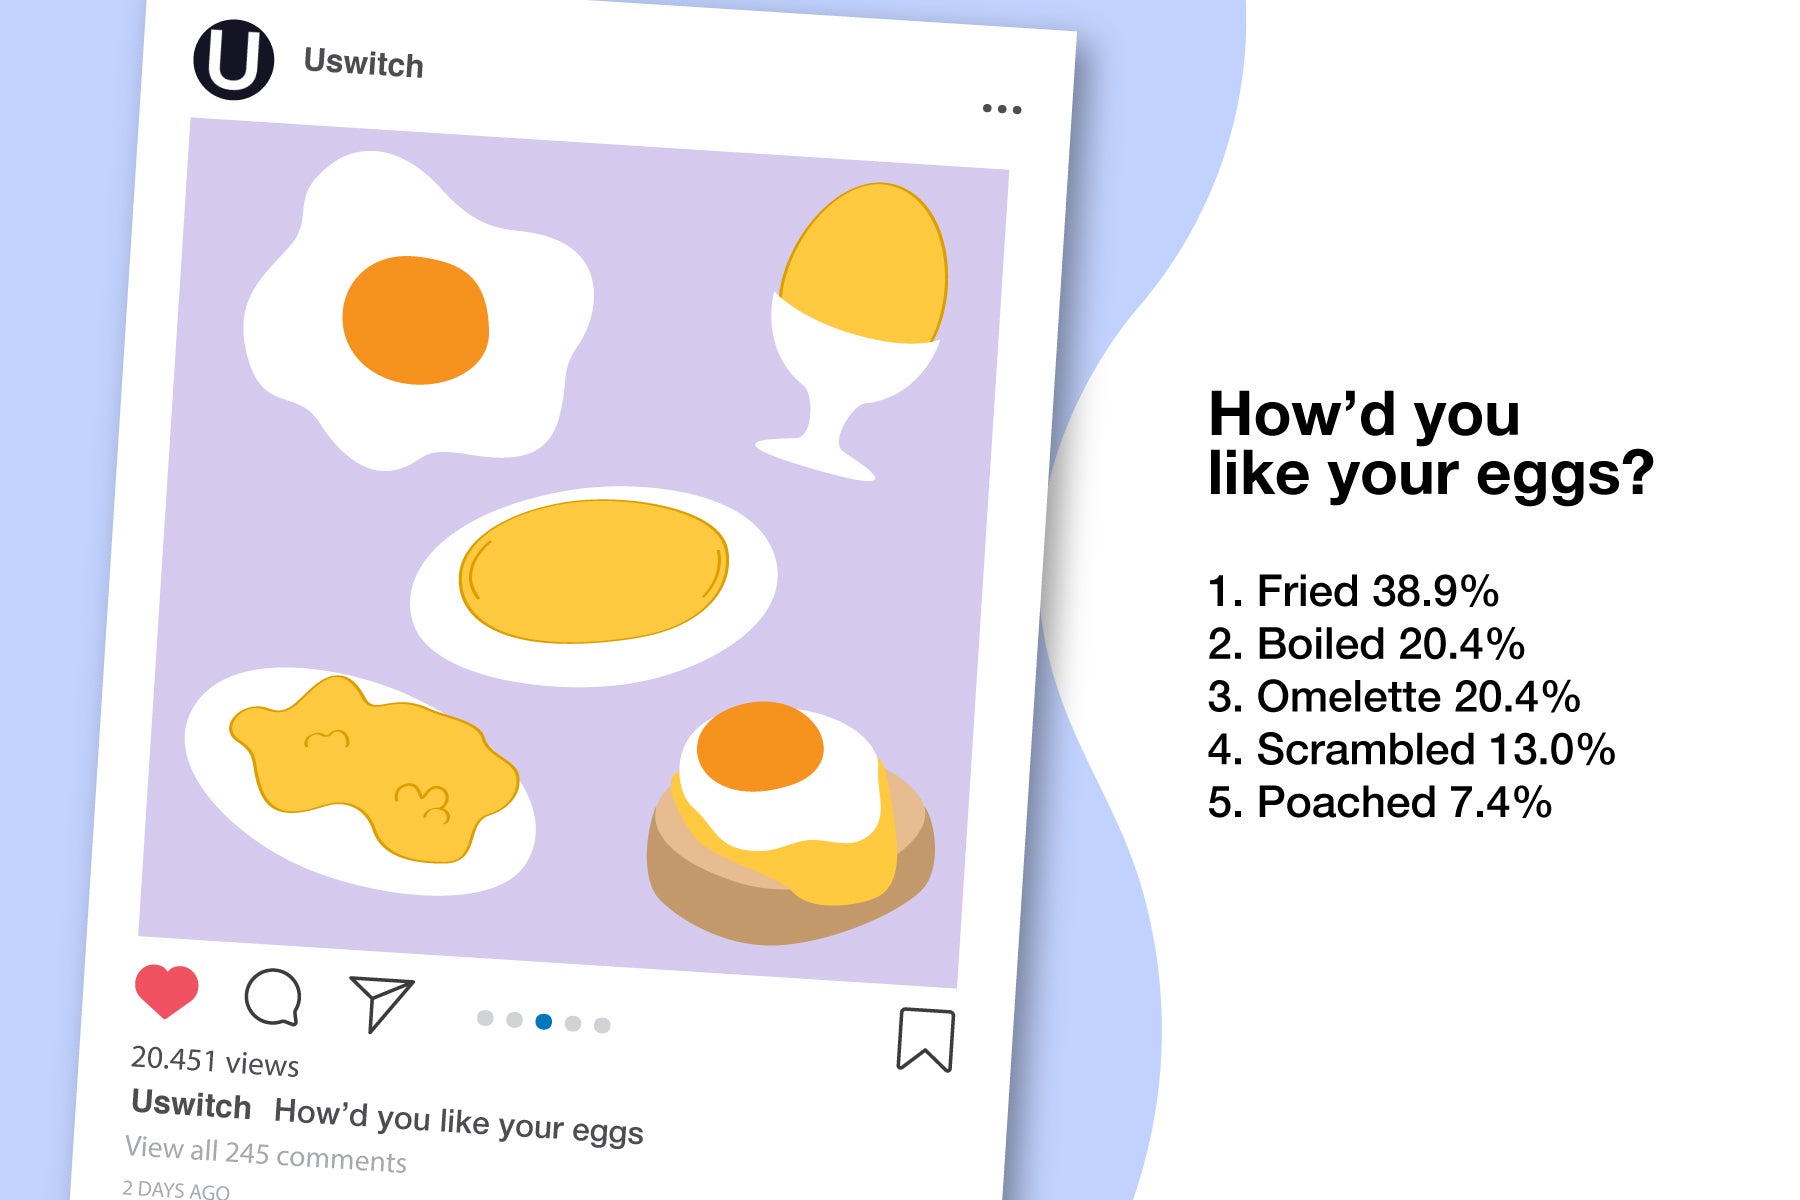 Instagrammed eggs